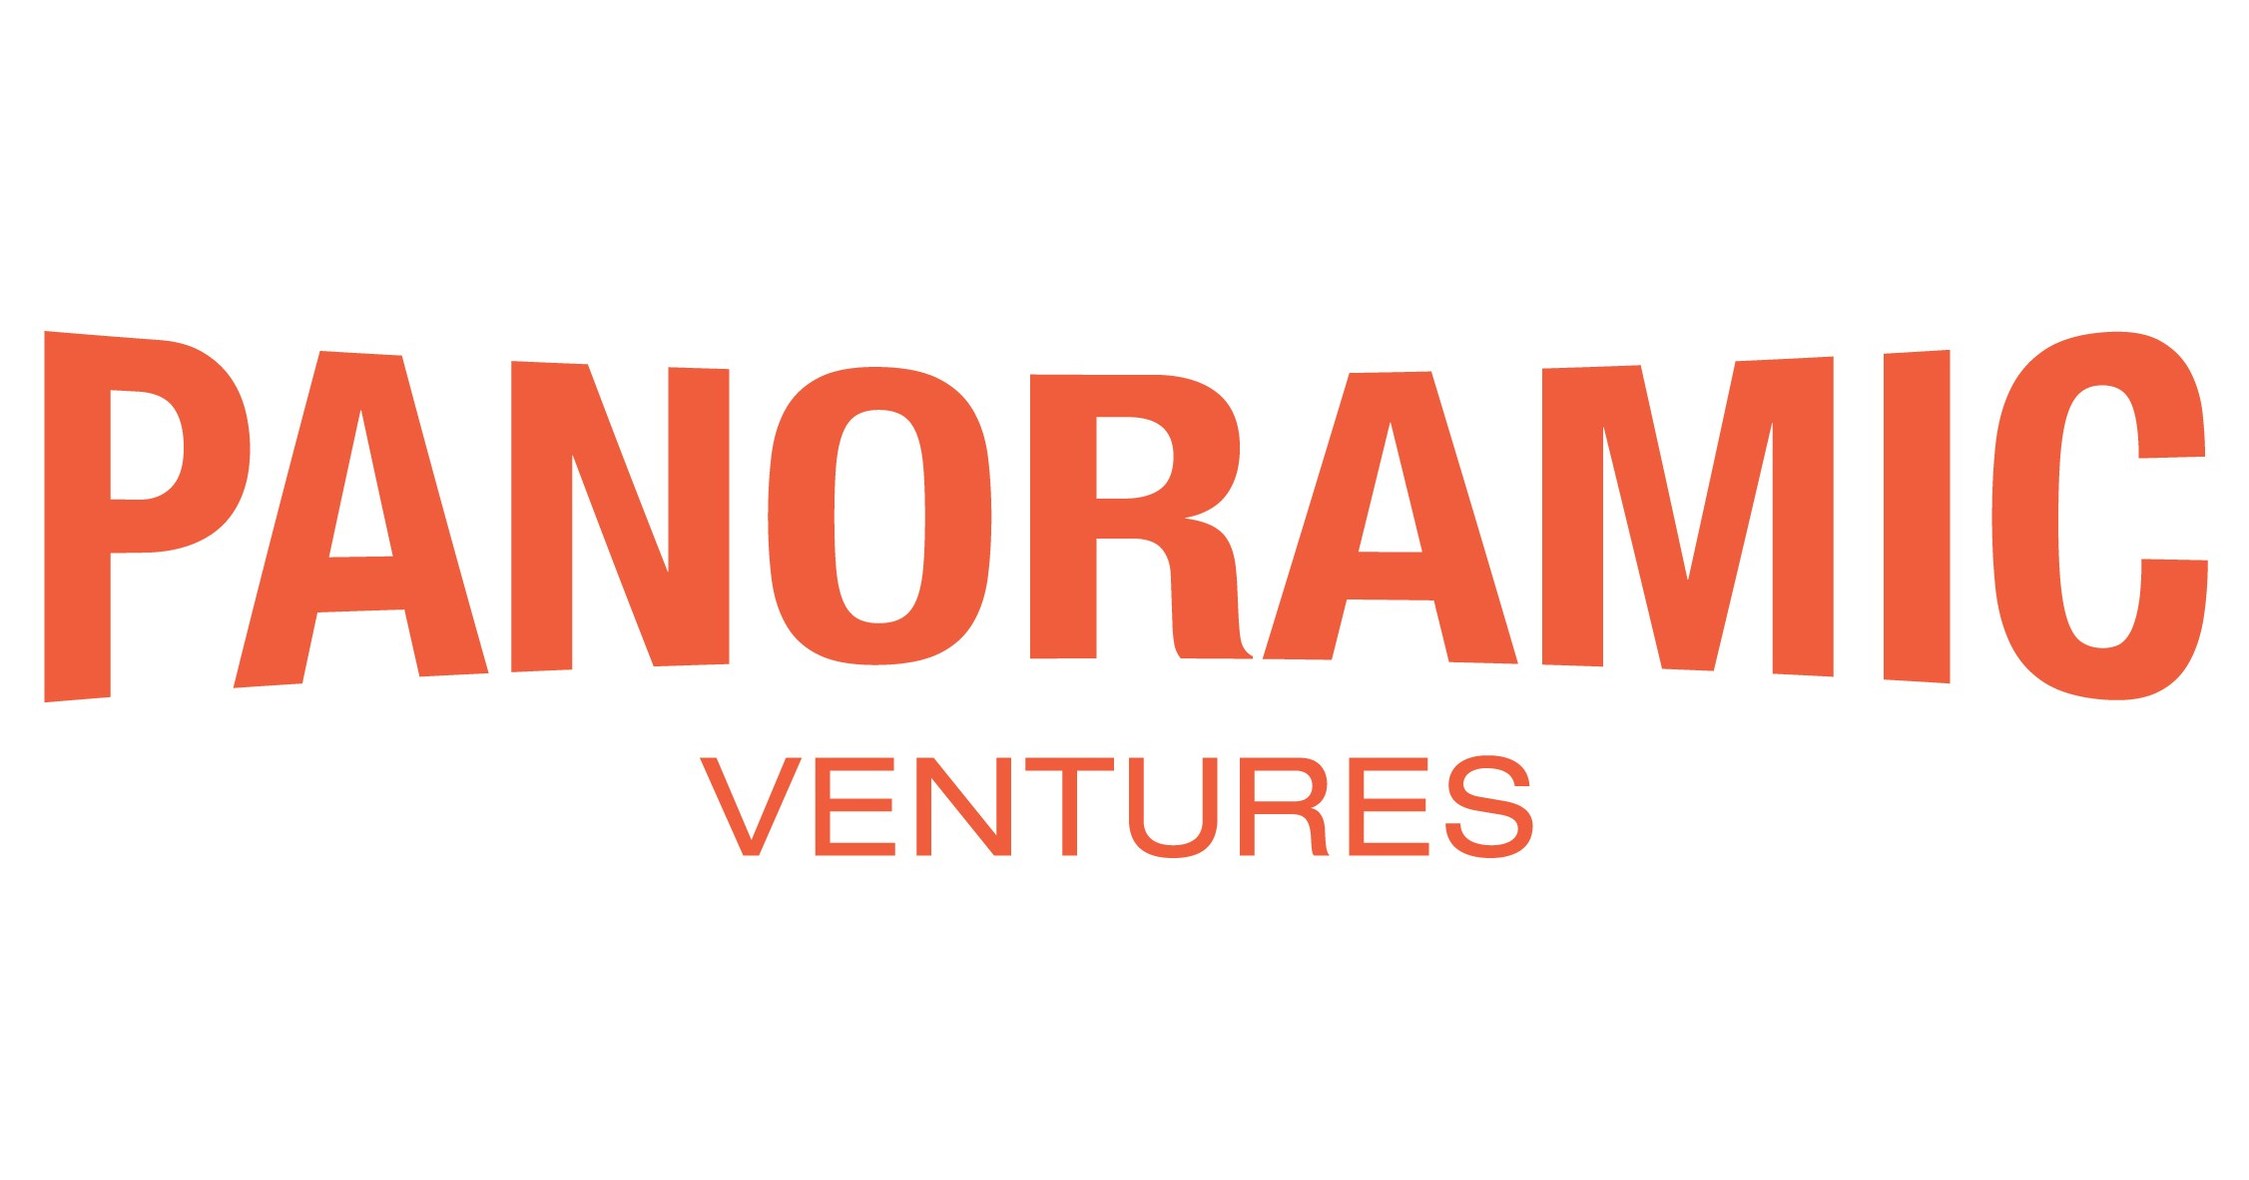 Panoramic-Ventures-Brandmark-Orange Logo